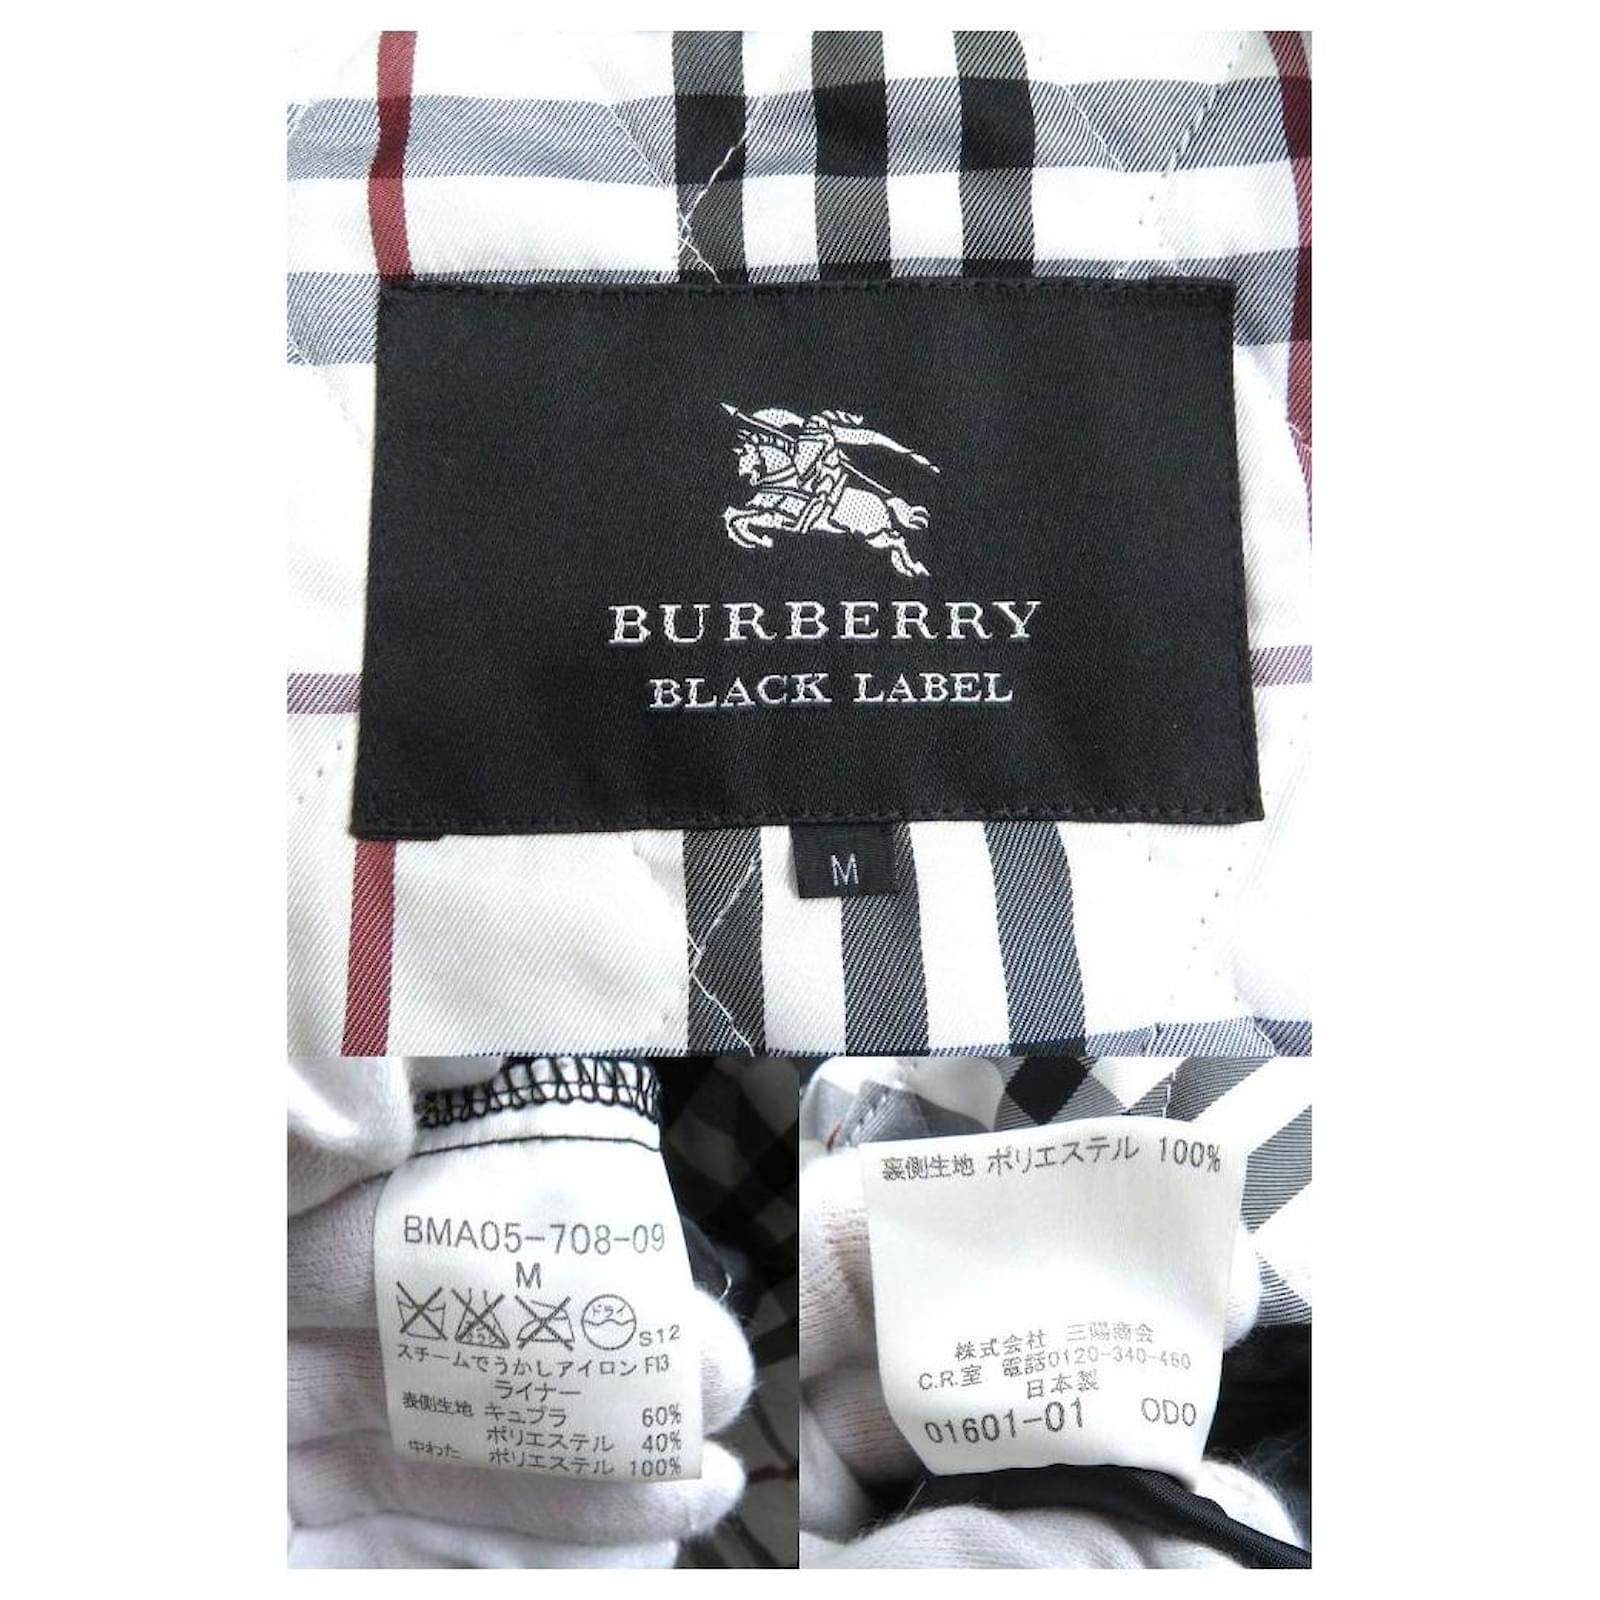 Used] Genuine △ BURBERRY BLACKLABEL Burberry black label batting